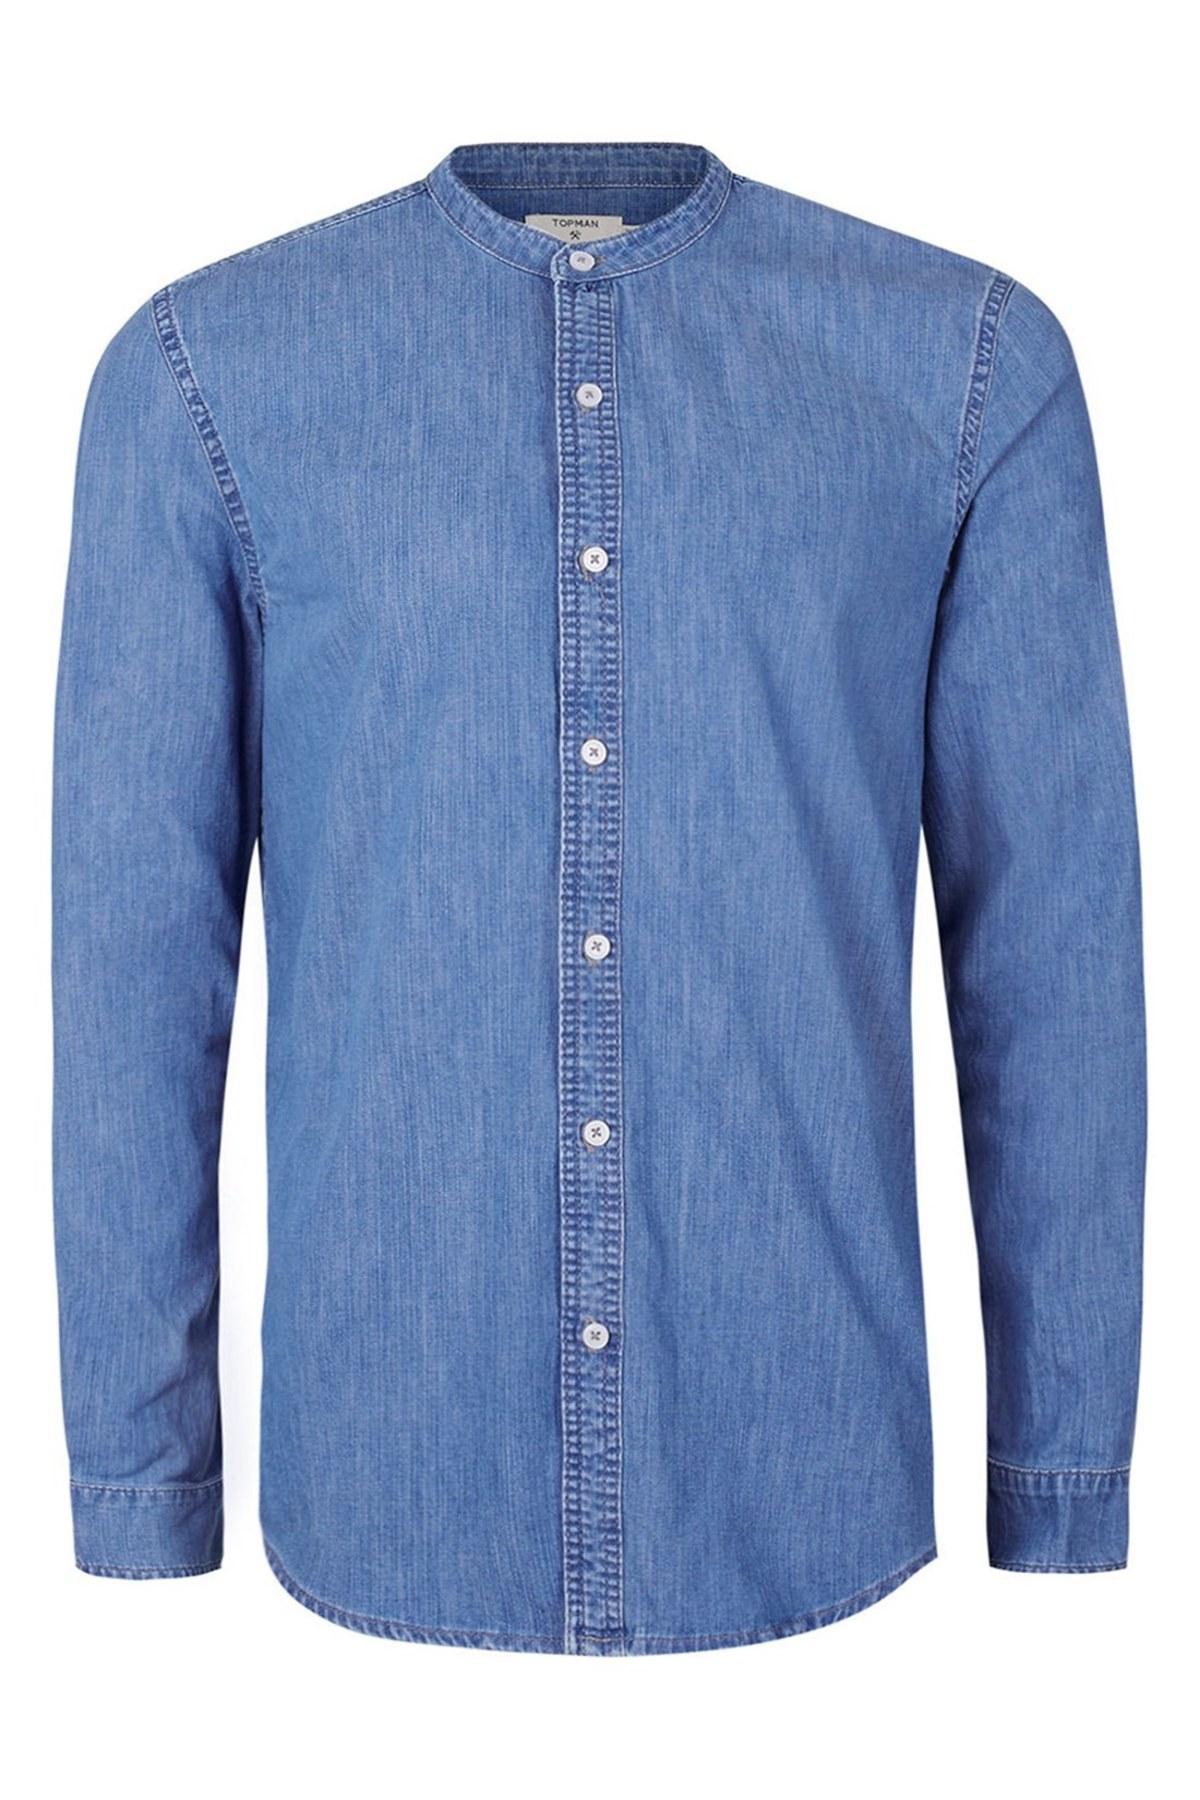 Topman Band Collar Denim Shirt in Blue for Men | Lyst